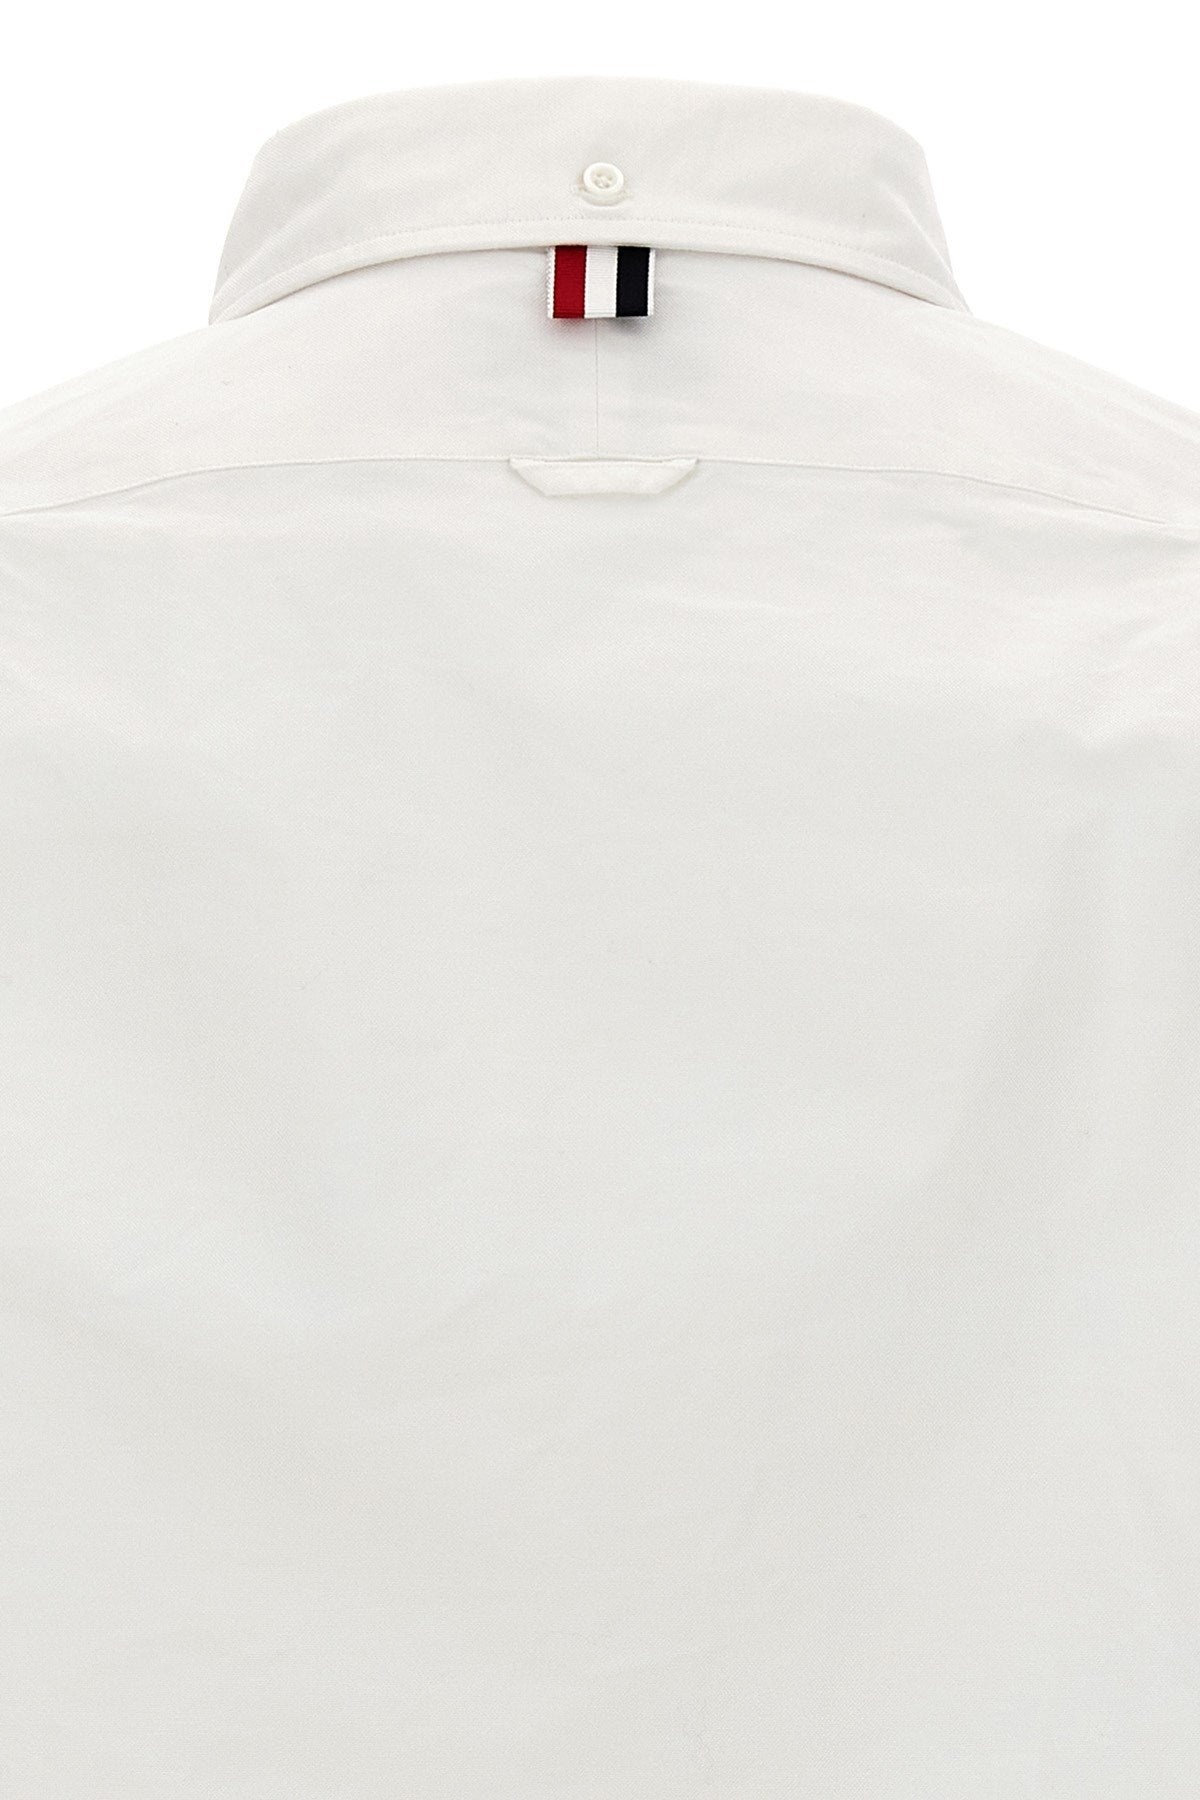 Thom Browne Men 'Straight Fit' Shirt - 5